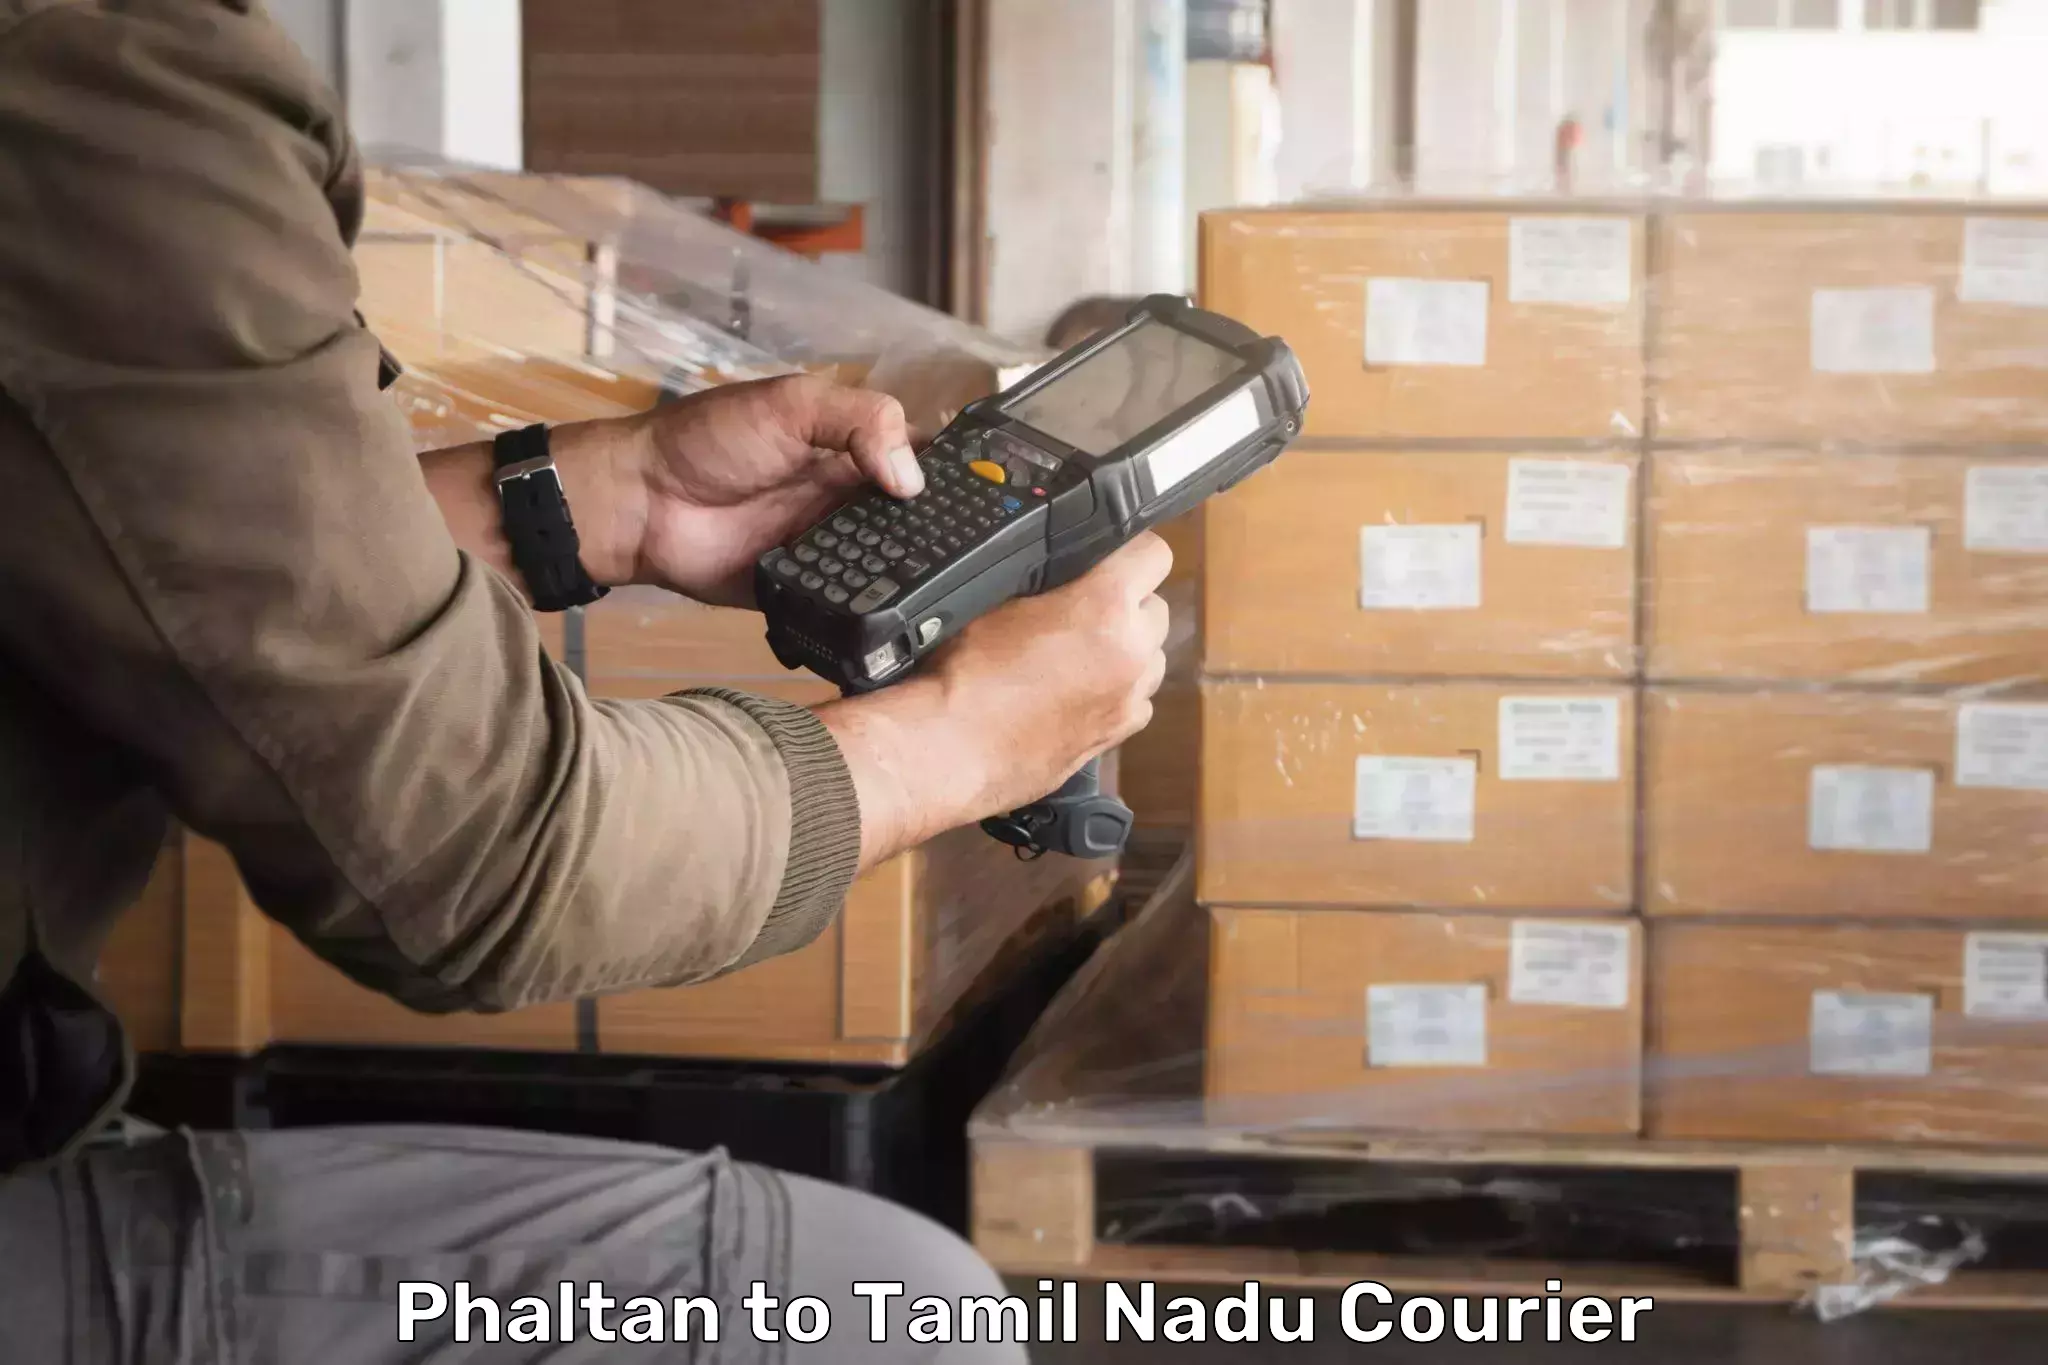 Customizable shipping options Phaltan to Rathinasabapathy Puram